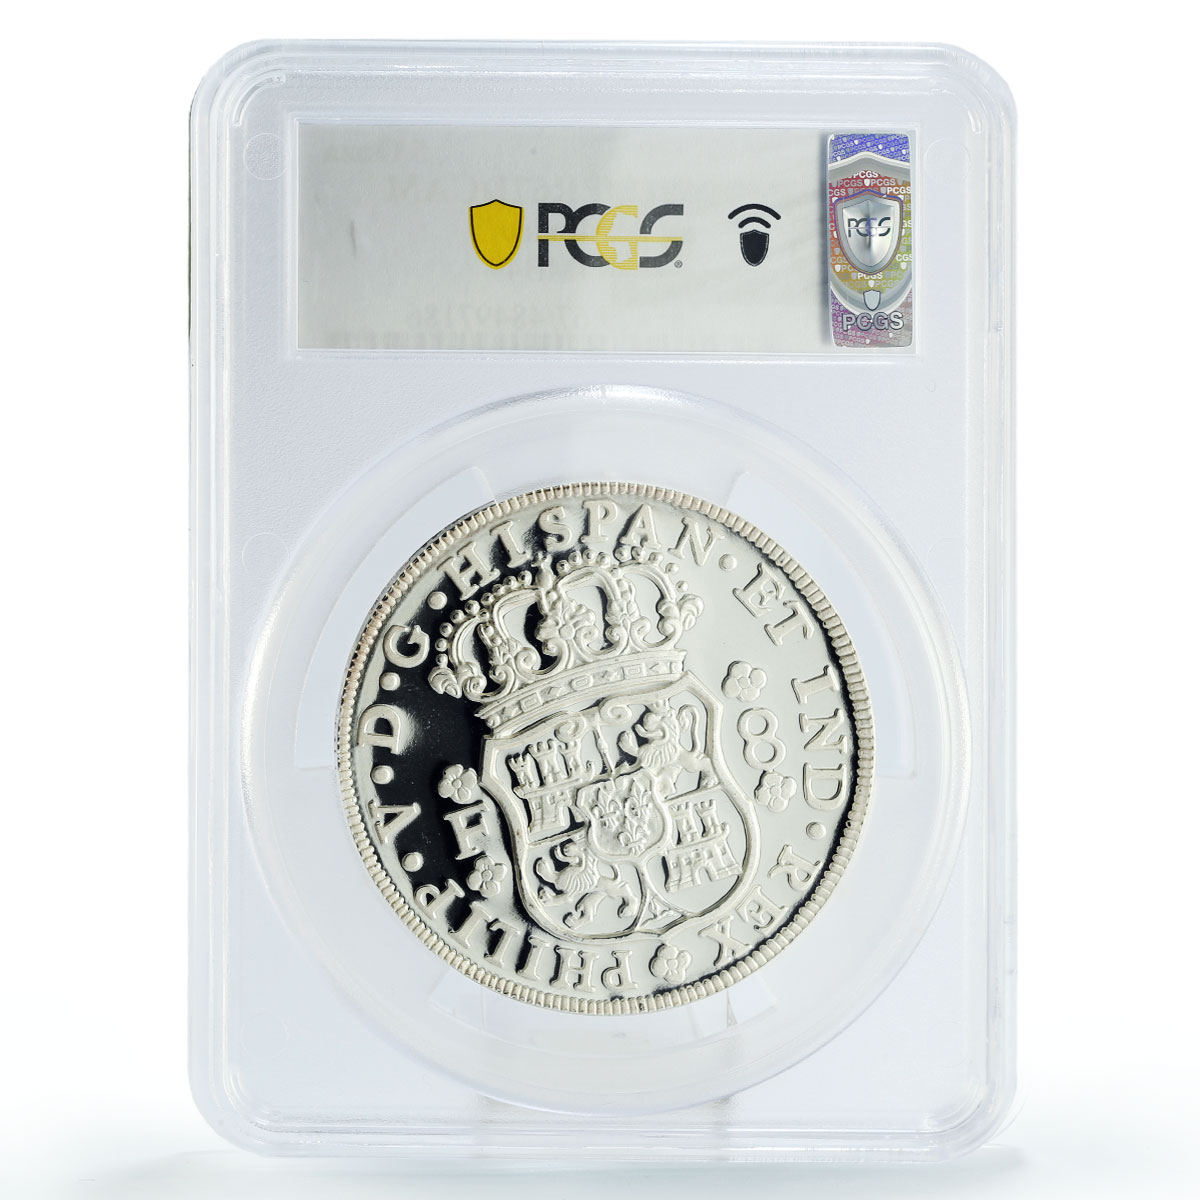 Mexico 5 onzas Numismatic Convention Pillar Dollar PR67 PCGS silver coin 1987